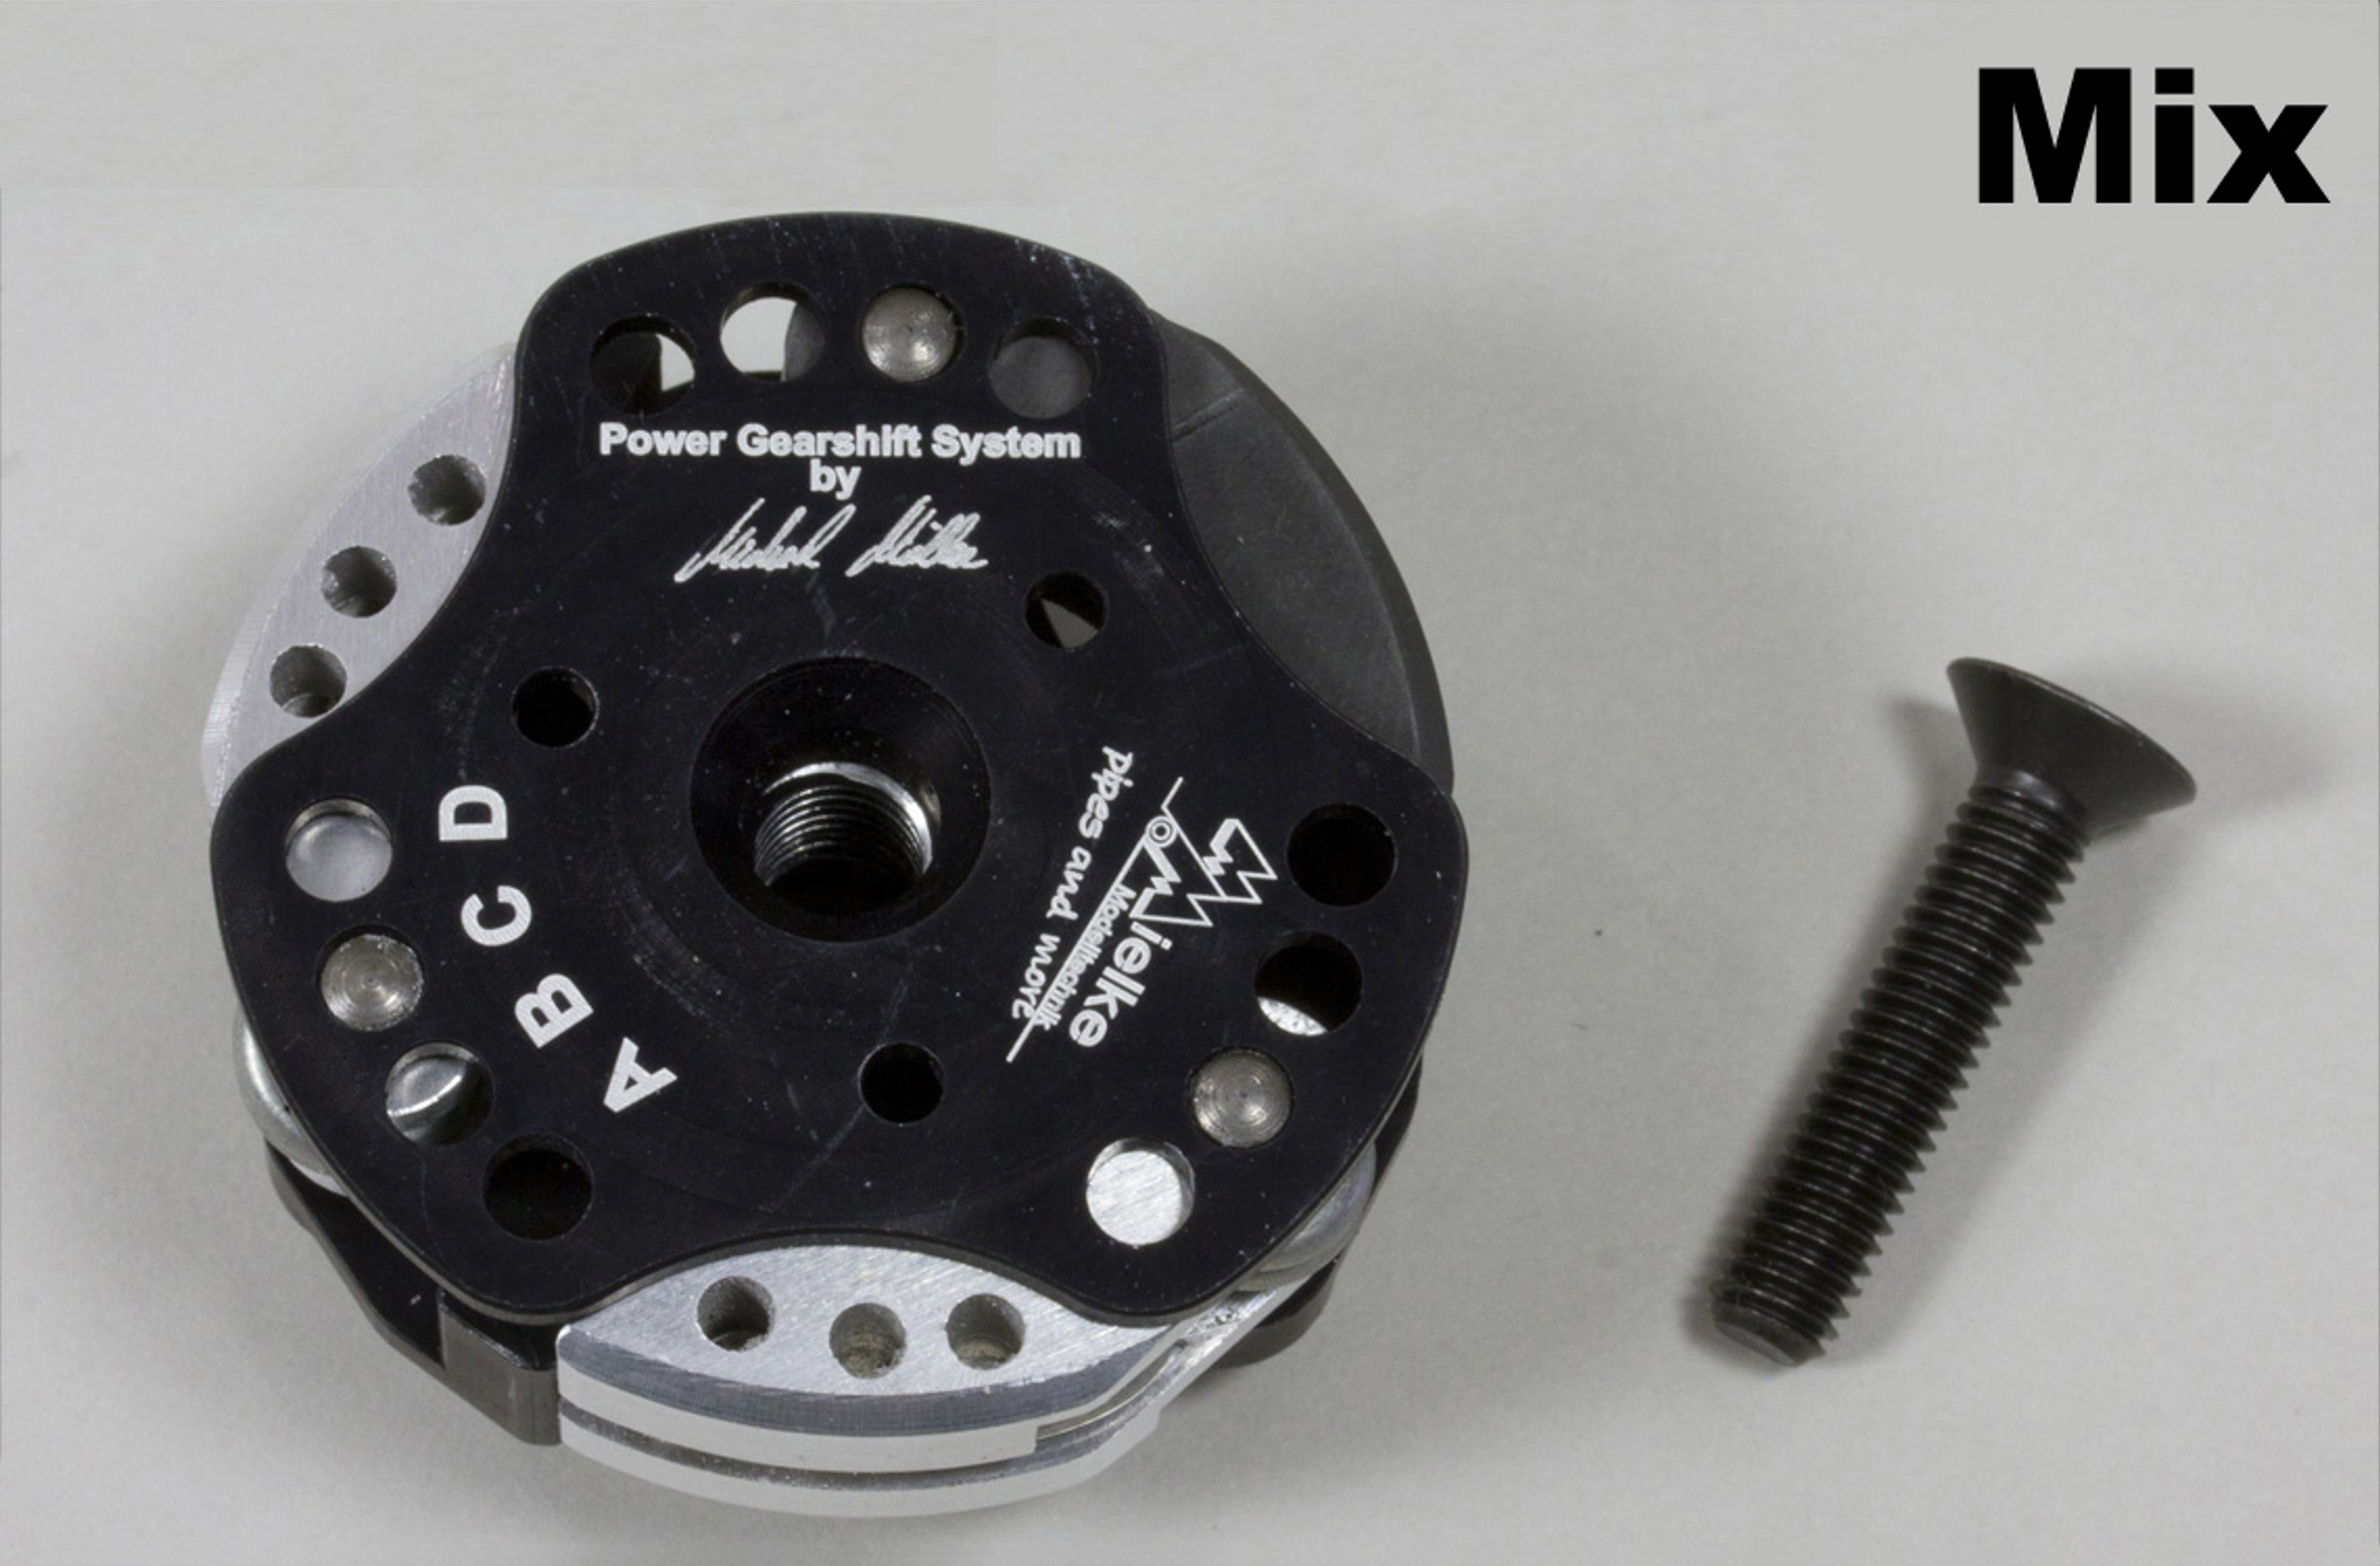 Mielke 5542 Power Gearshift Kupplung für FG Formel 1/RS5 TW/F1/Harm Sx4 TW/Evo 2020, Mix, 2,4mm Federn, kurzer Kupplungsmitnehmer